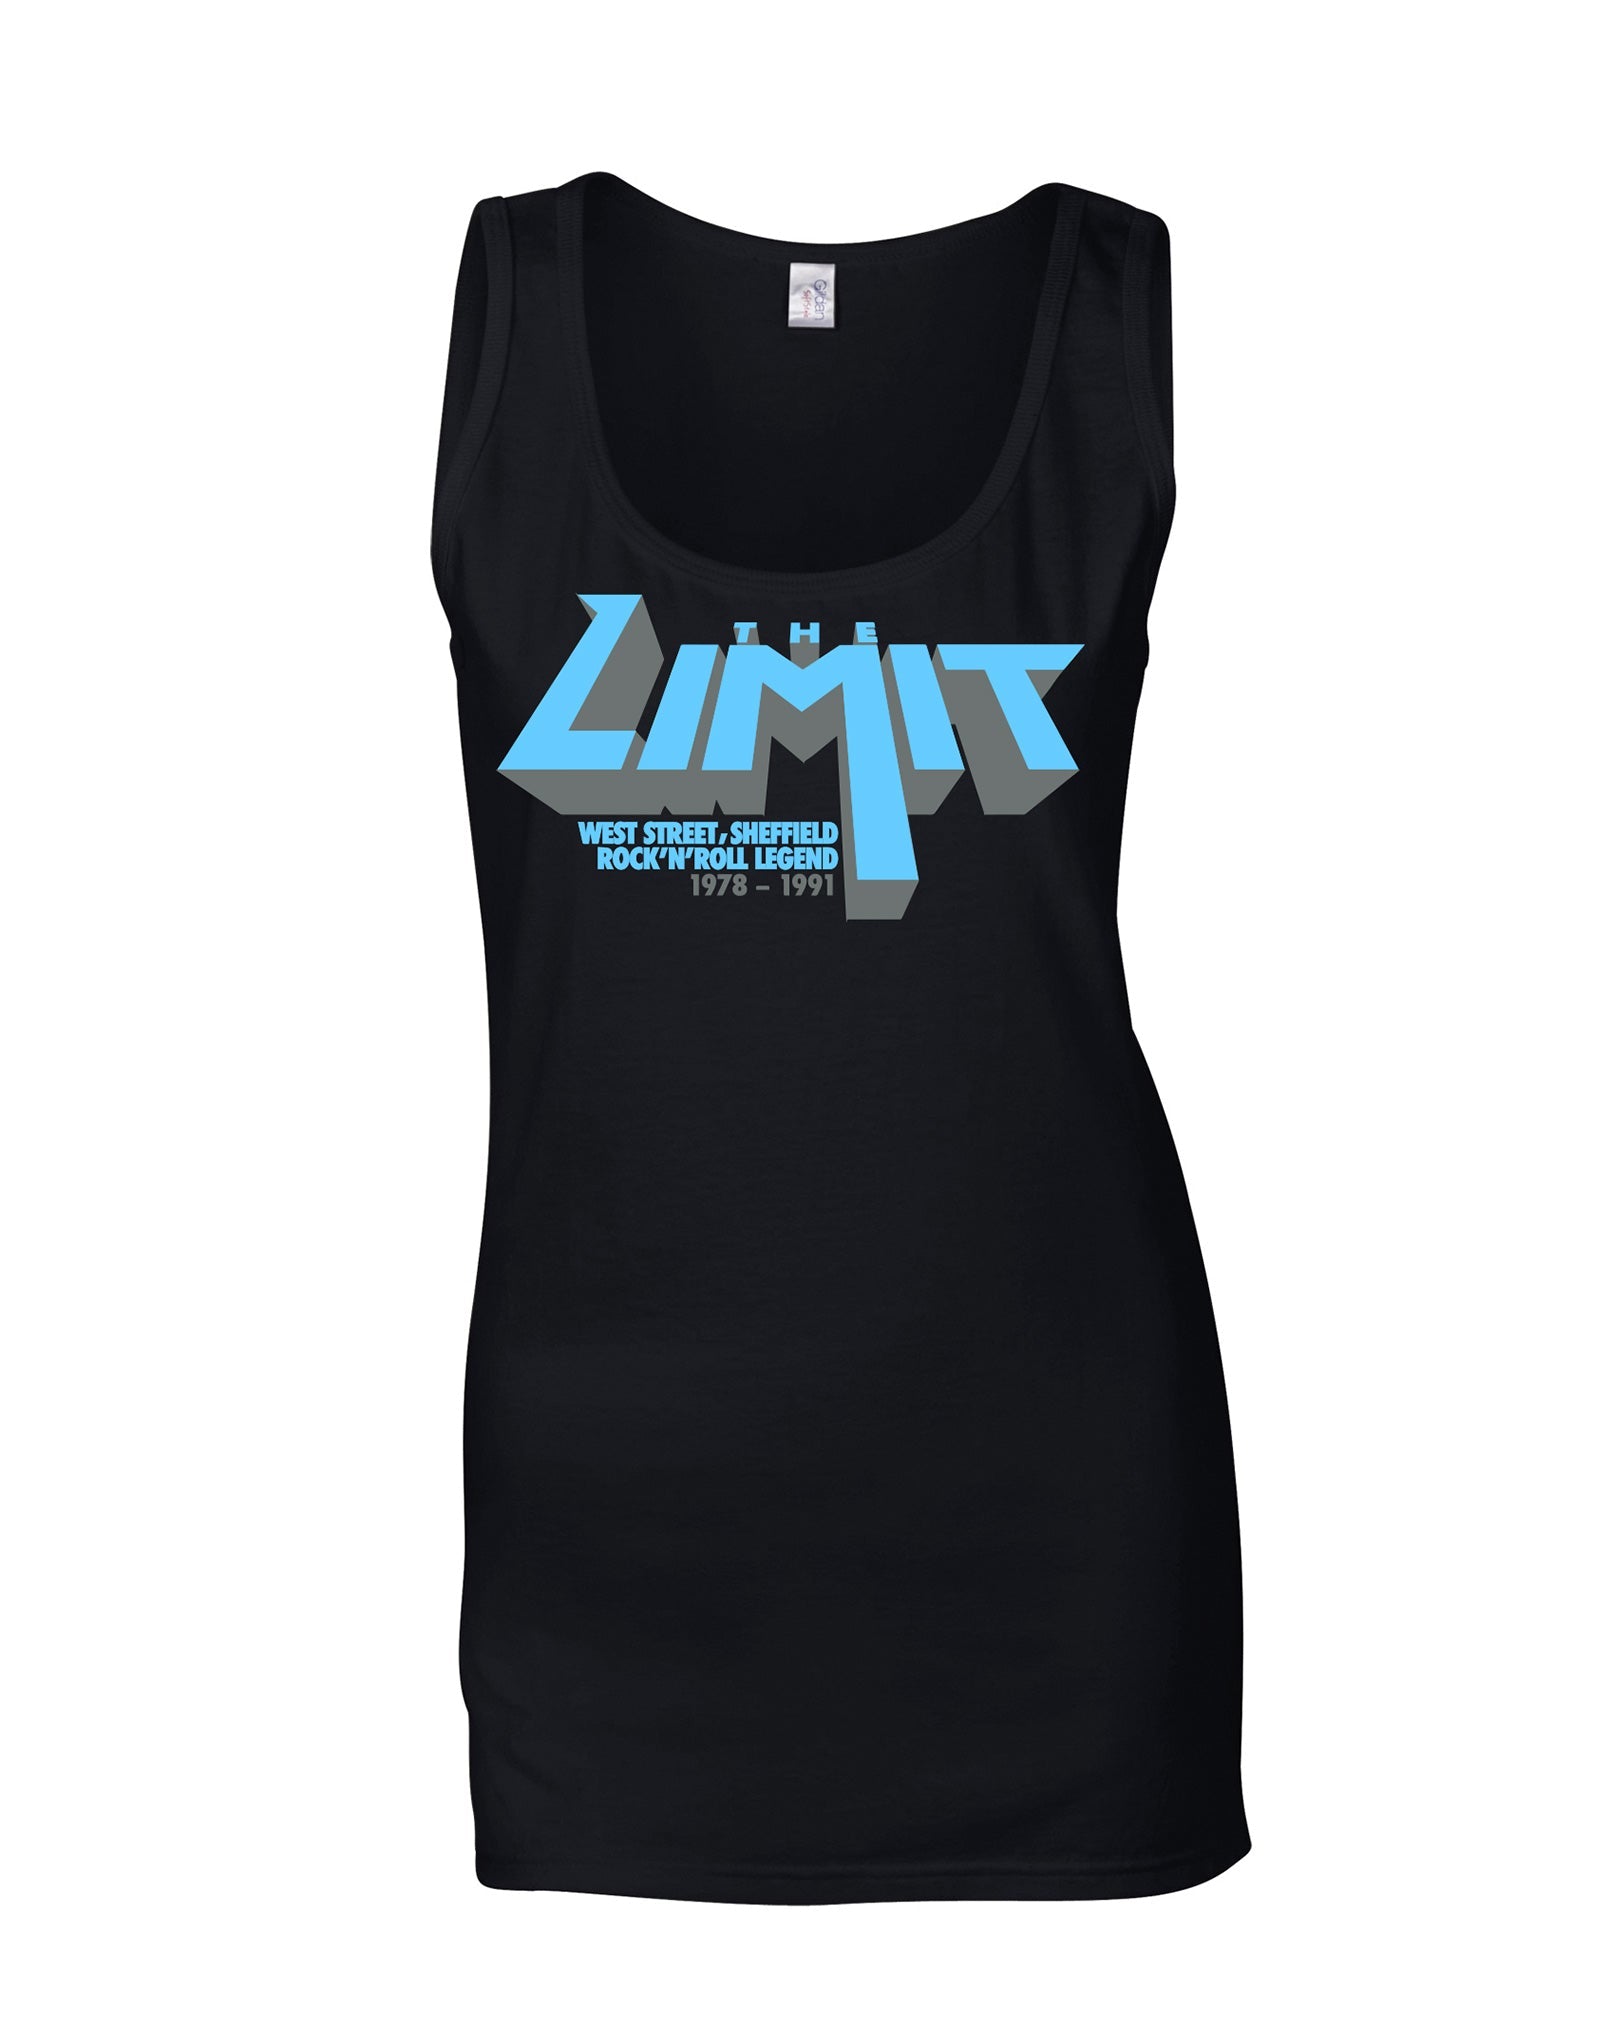 Limit anniversary (blue logo) ladies fit vest - various colours - Dirty Stop Outs